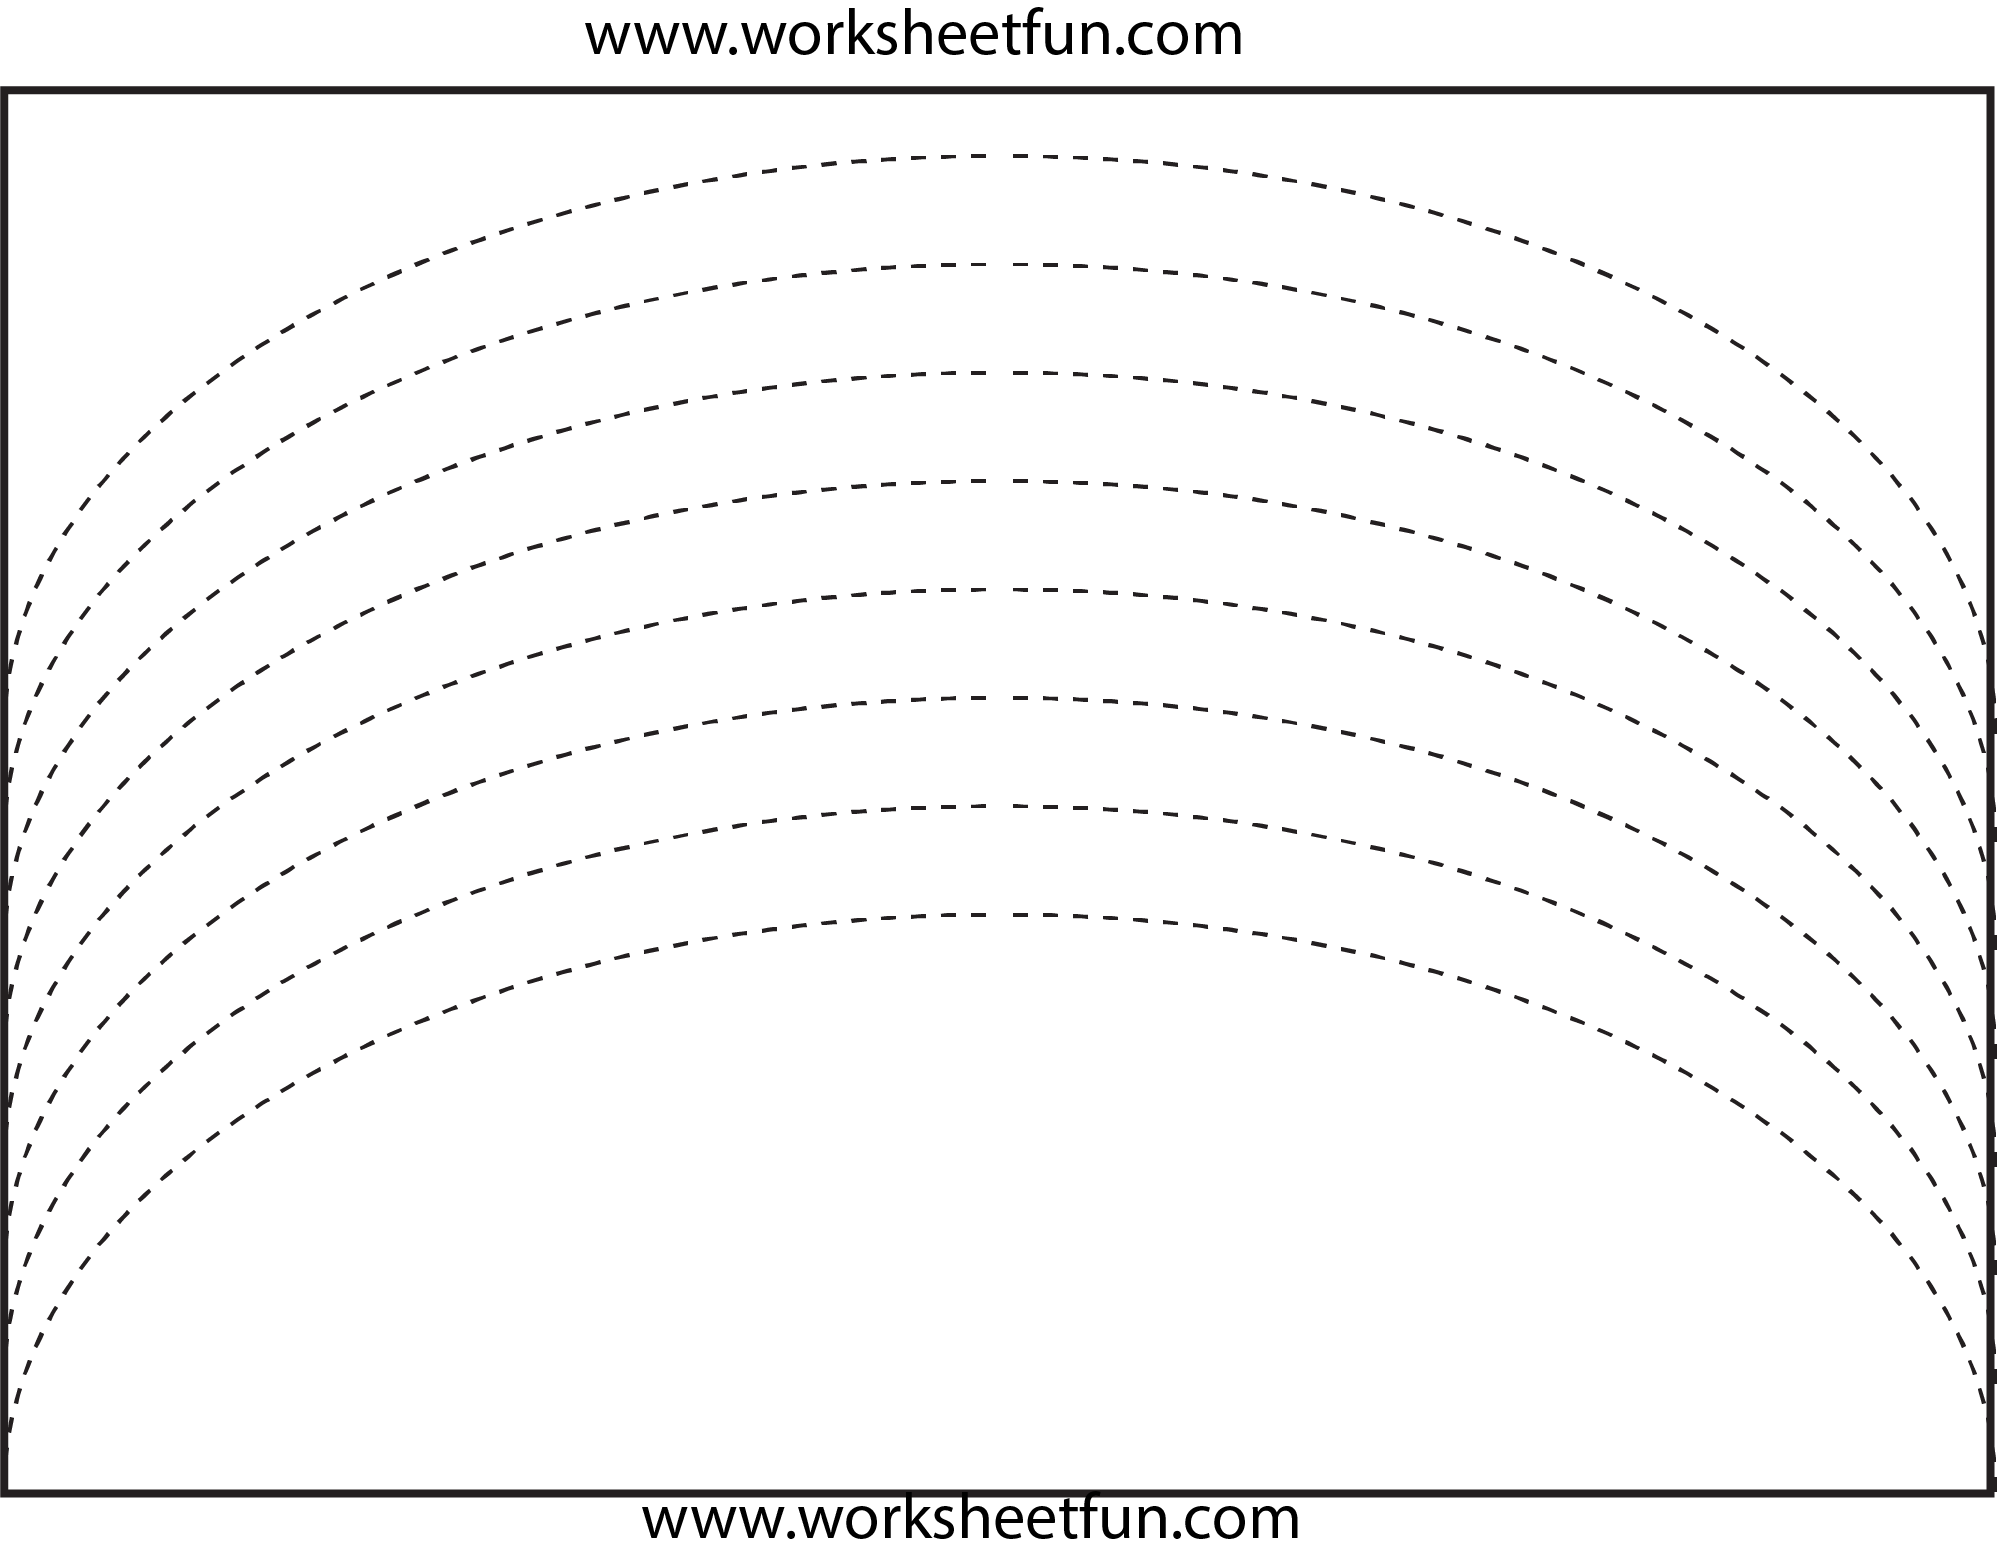 curved-line-tracing-4-worksheets-free-printable-worksheets